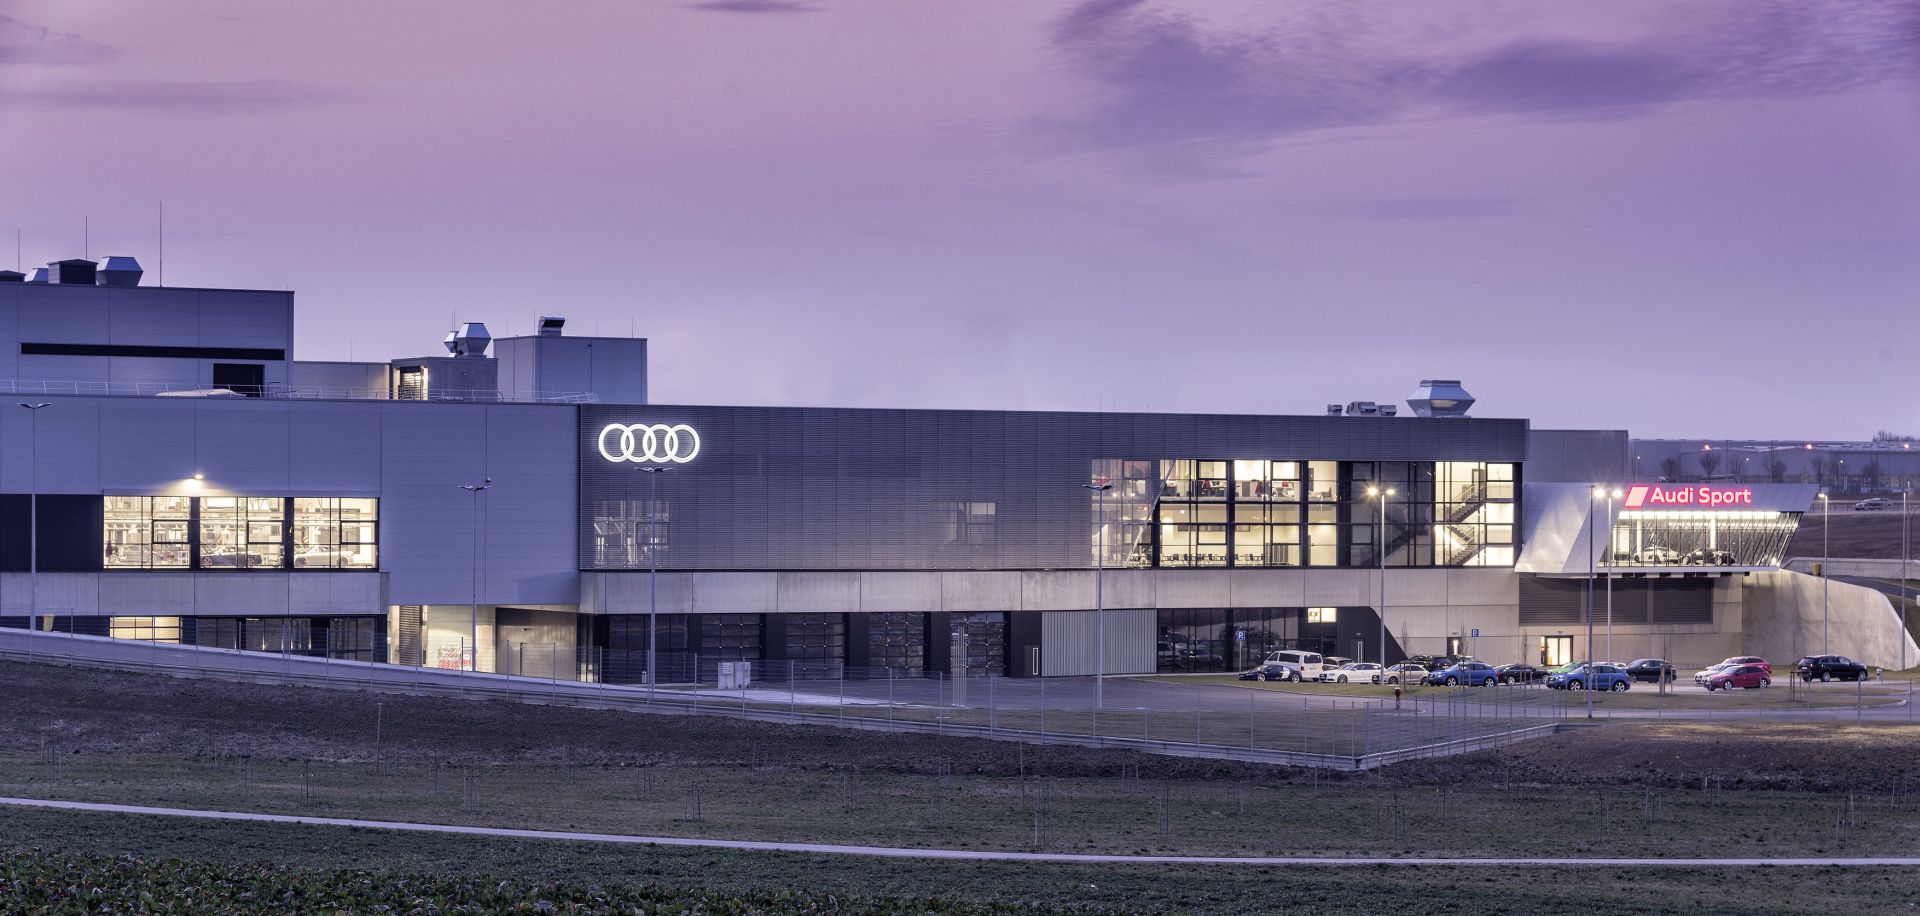 Audi Sport GmbH